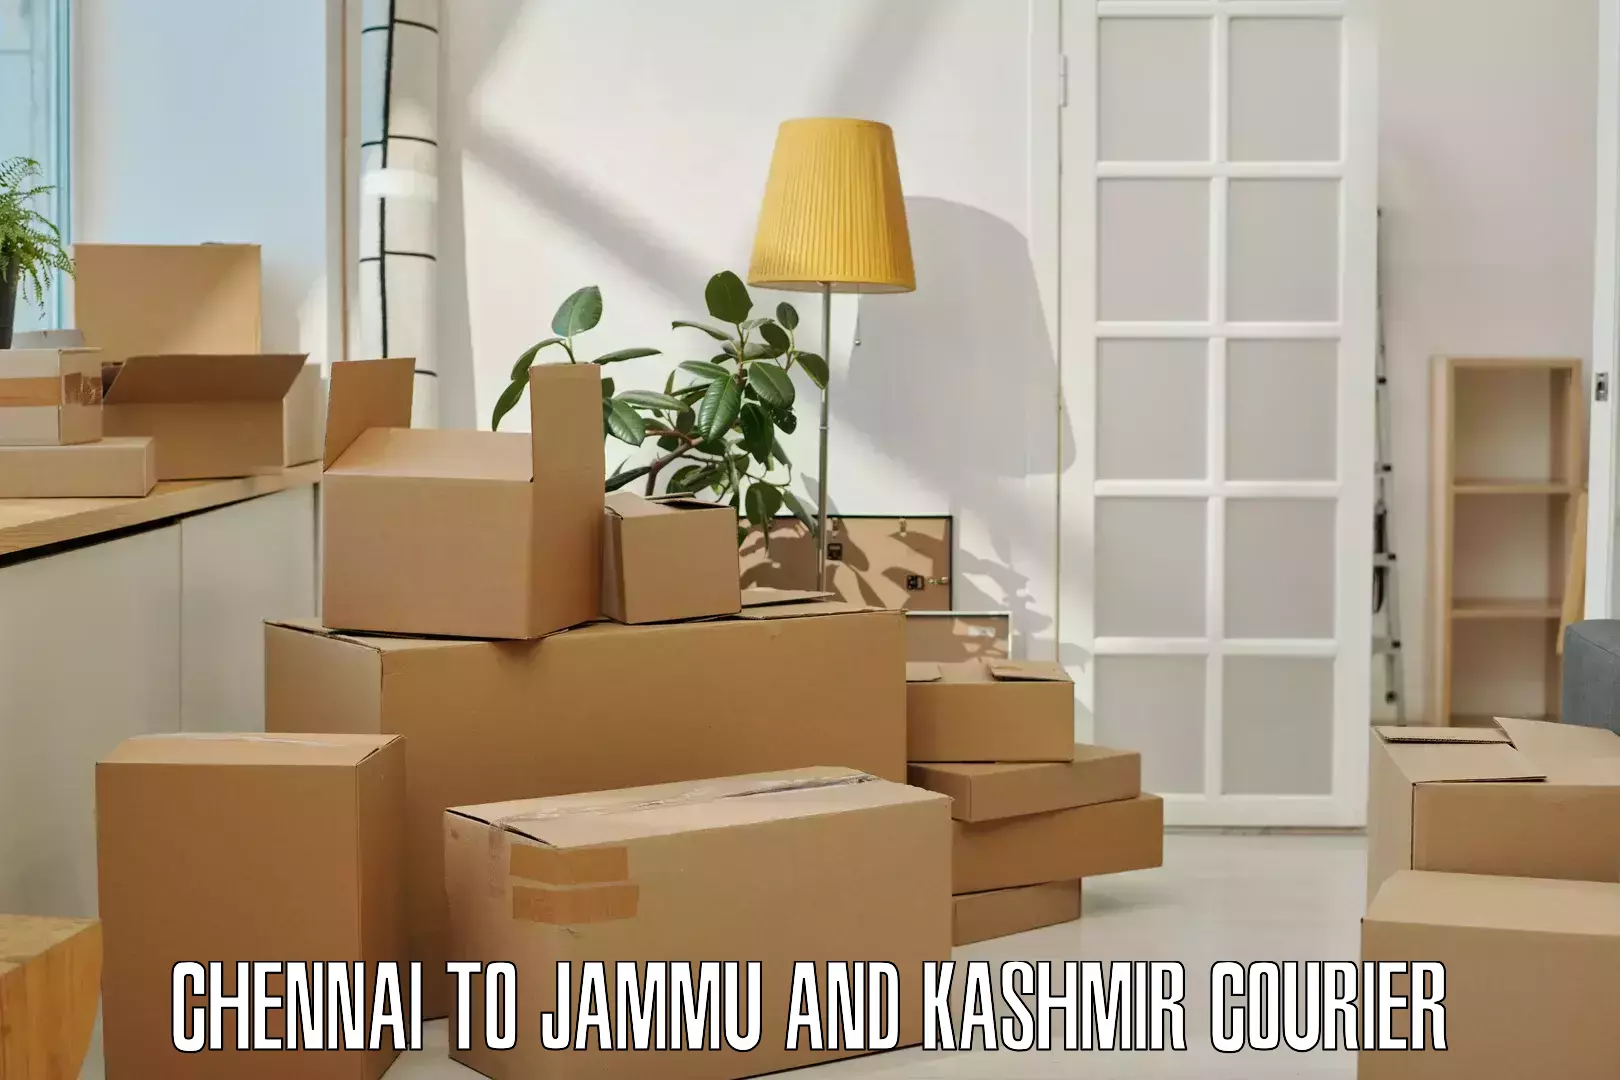 Local delivery service in Chennai to Srinagar Kashmir